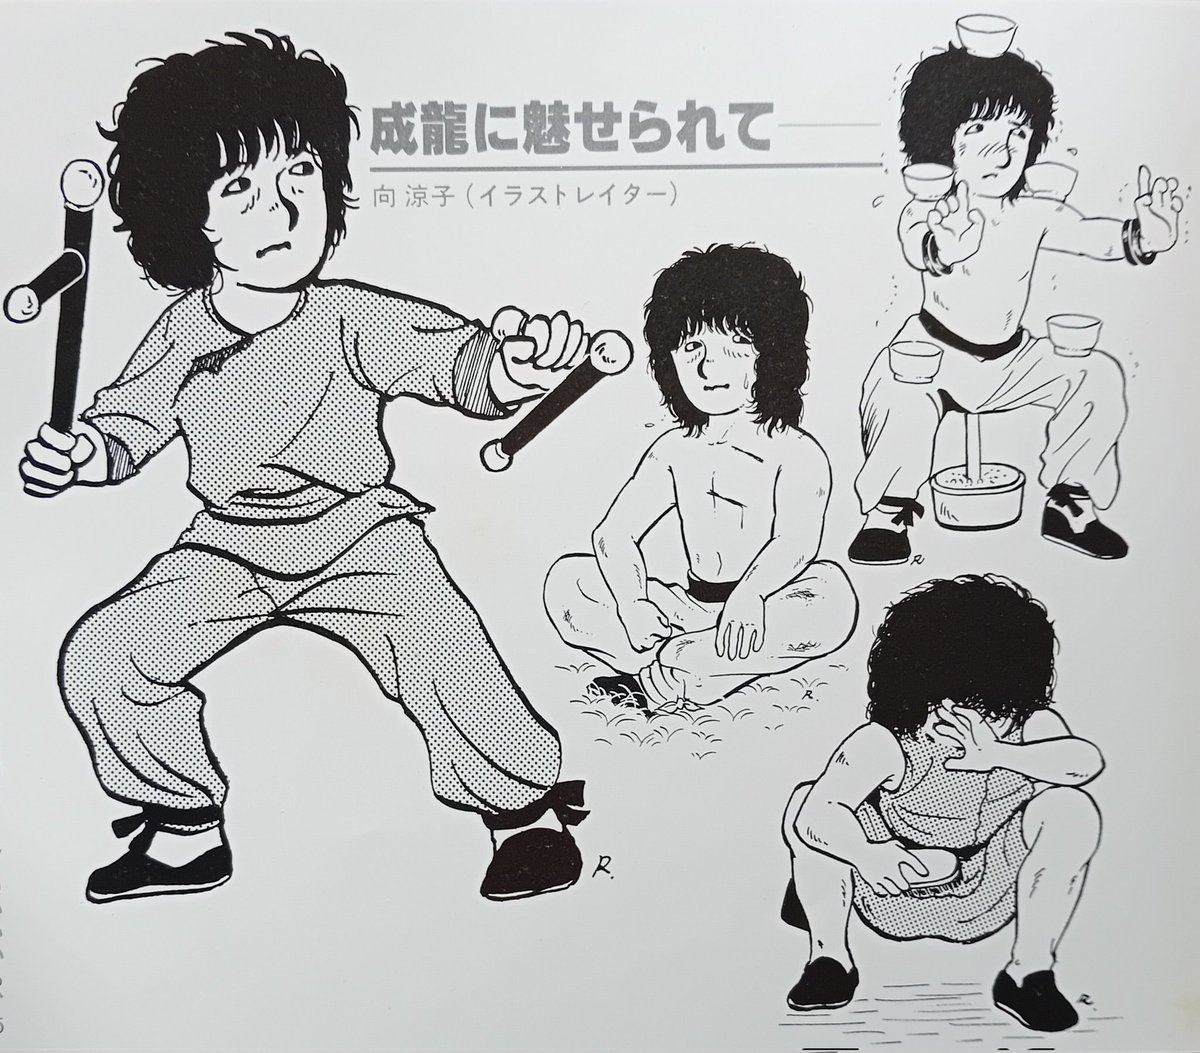 Some awesome drawings from the Spiritual Kung Fu program.

#JackieChan  #SpiritualKungFu